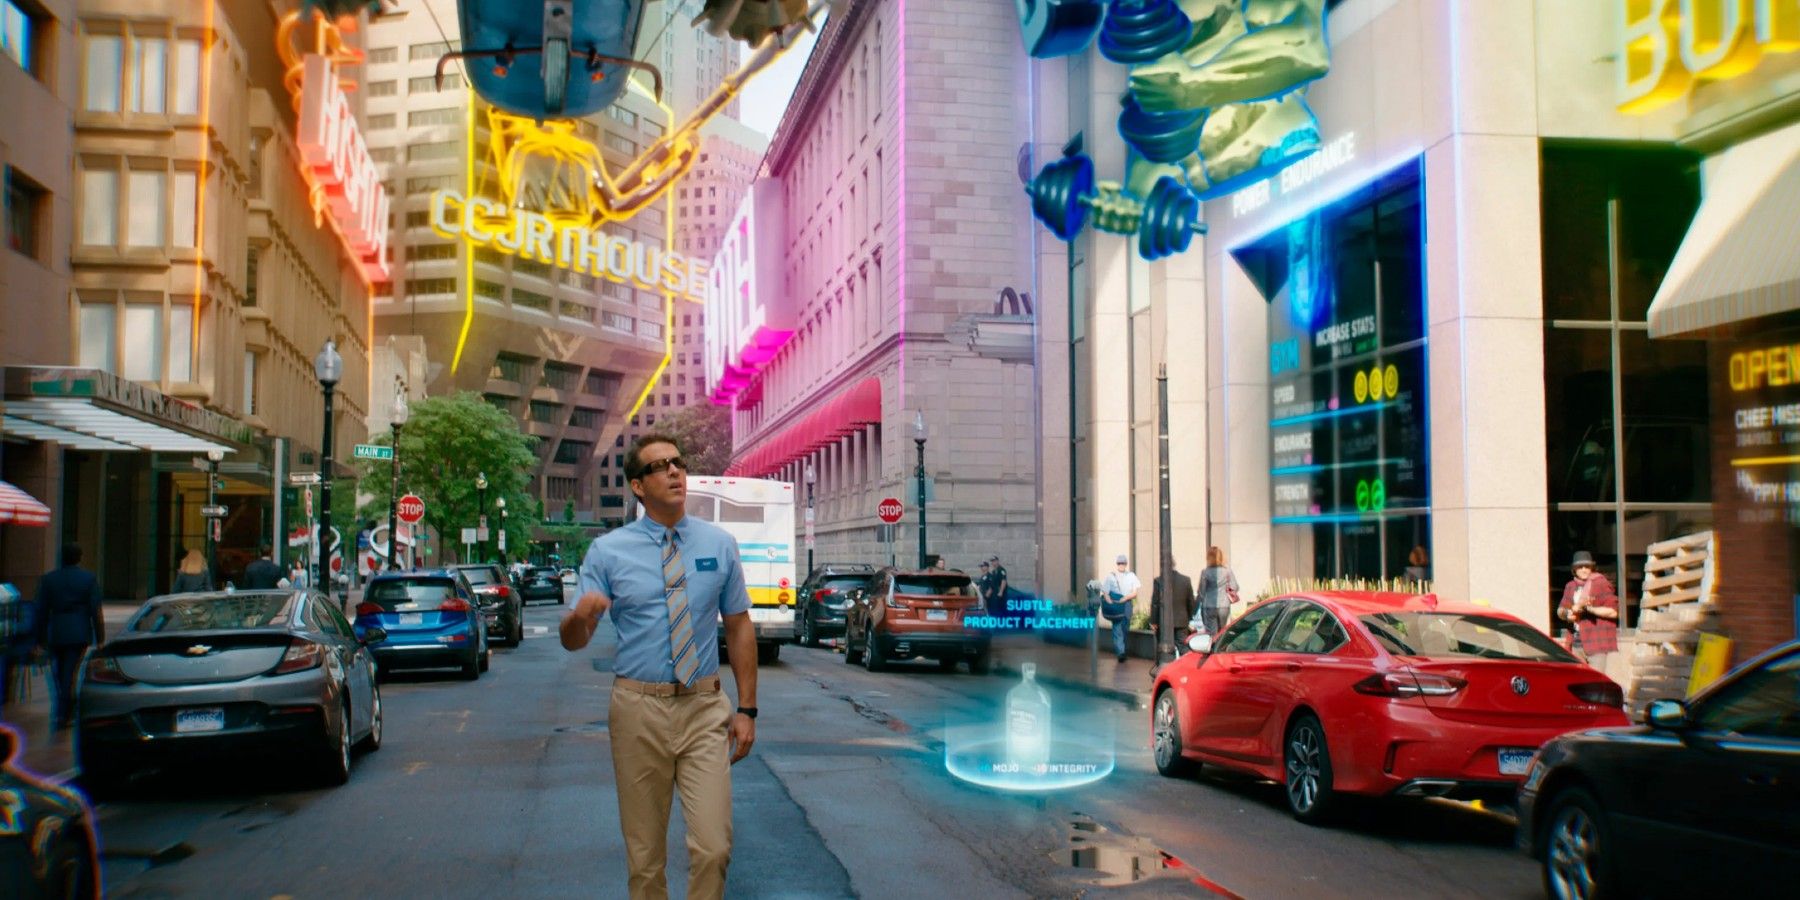 Ryan Reynolds as Guy Walking the Street in Free Guy